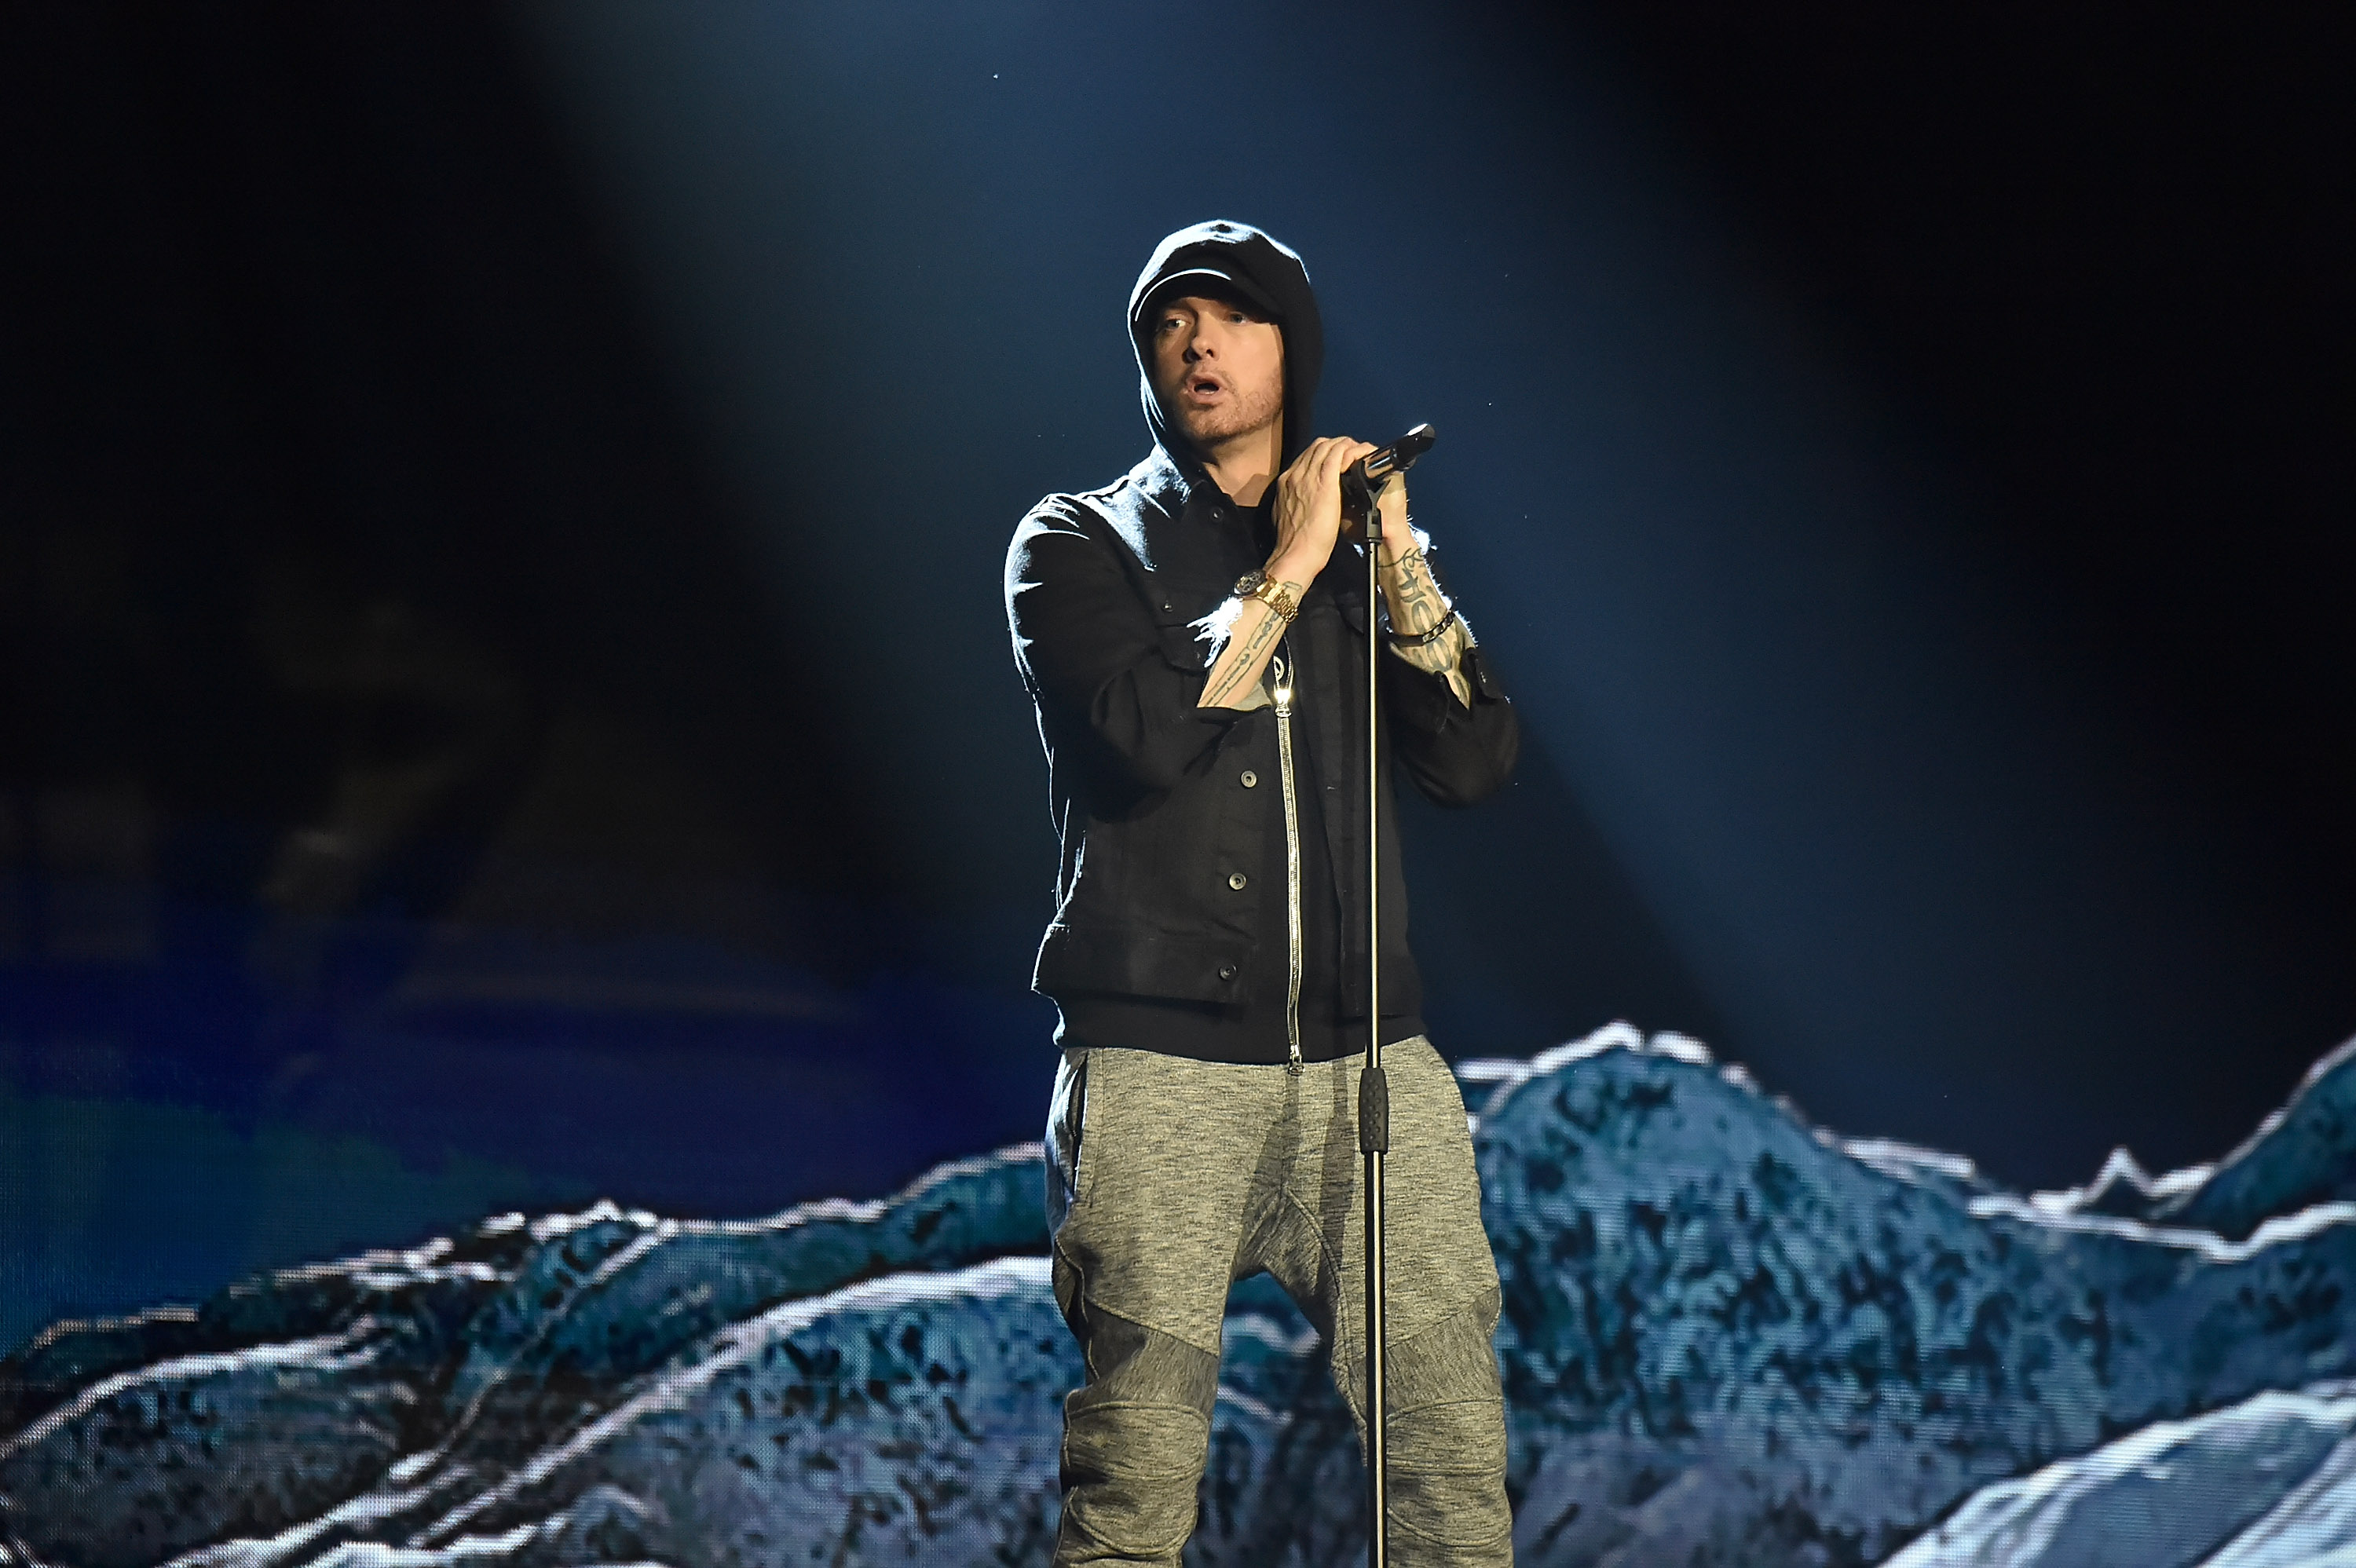 Jordan 2 Eminem 2008 for Sale, Authenticity Guaranteed